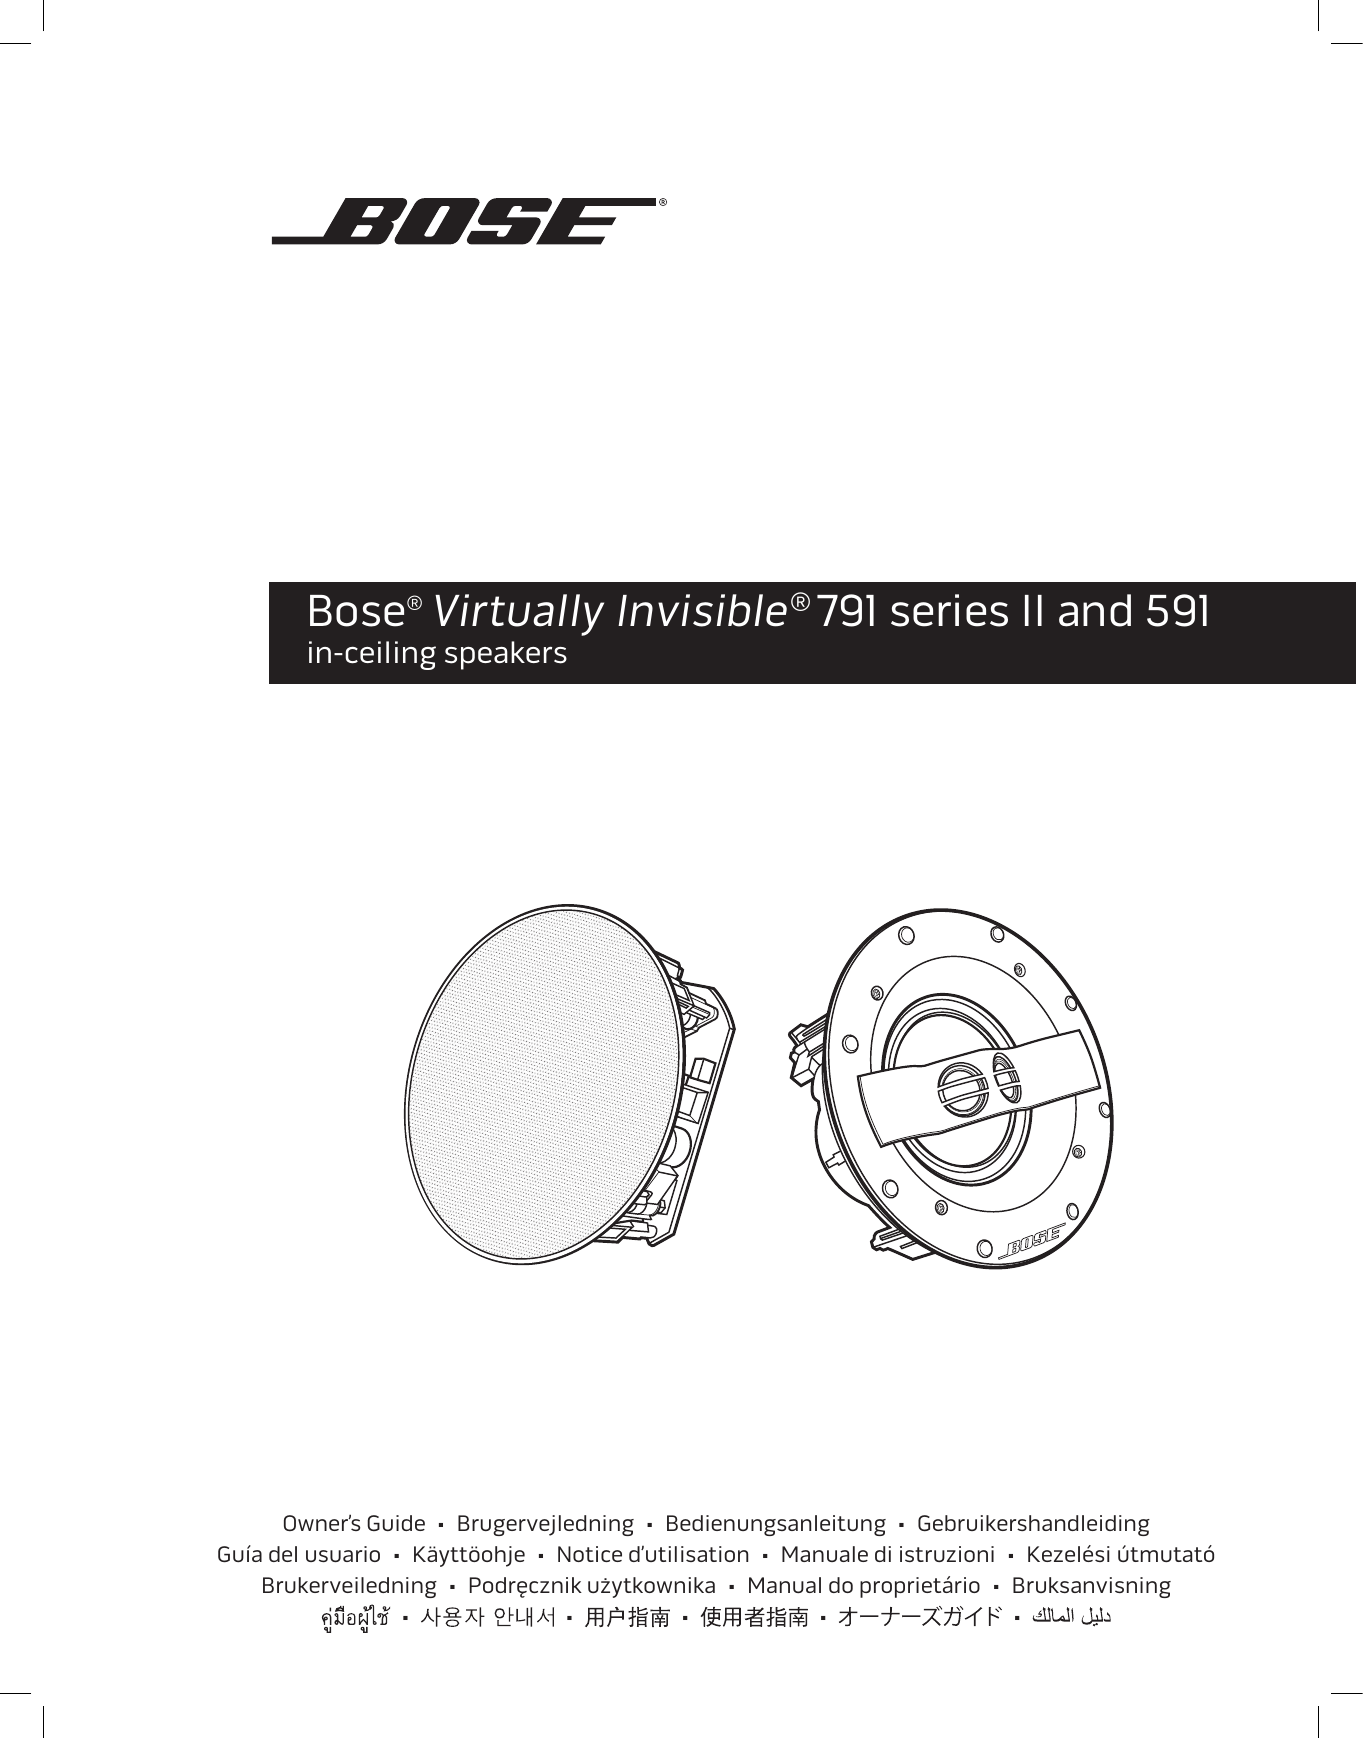 Bose 791 II Invisibl. Bose virtually Invisible 791 II. Bose virtually Invisible 591.